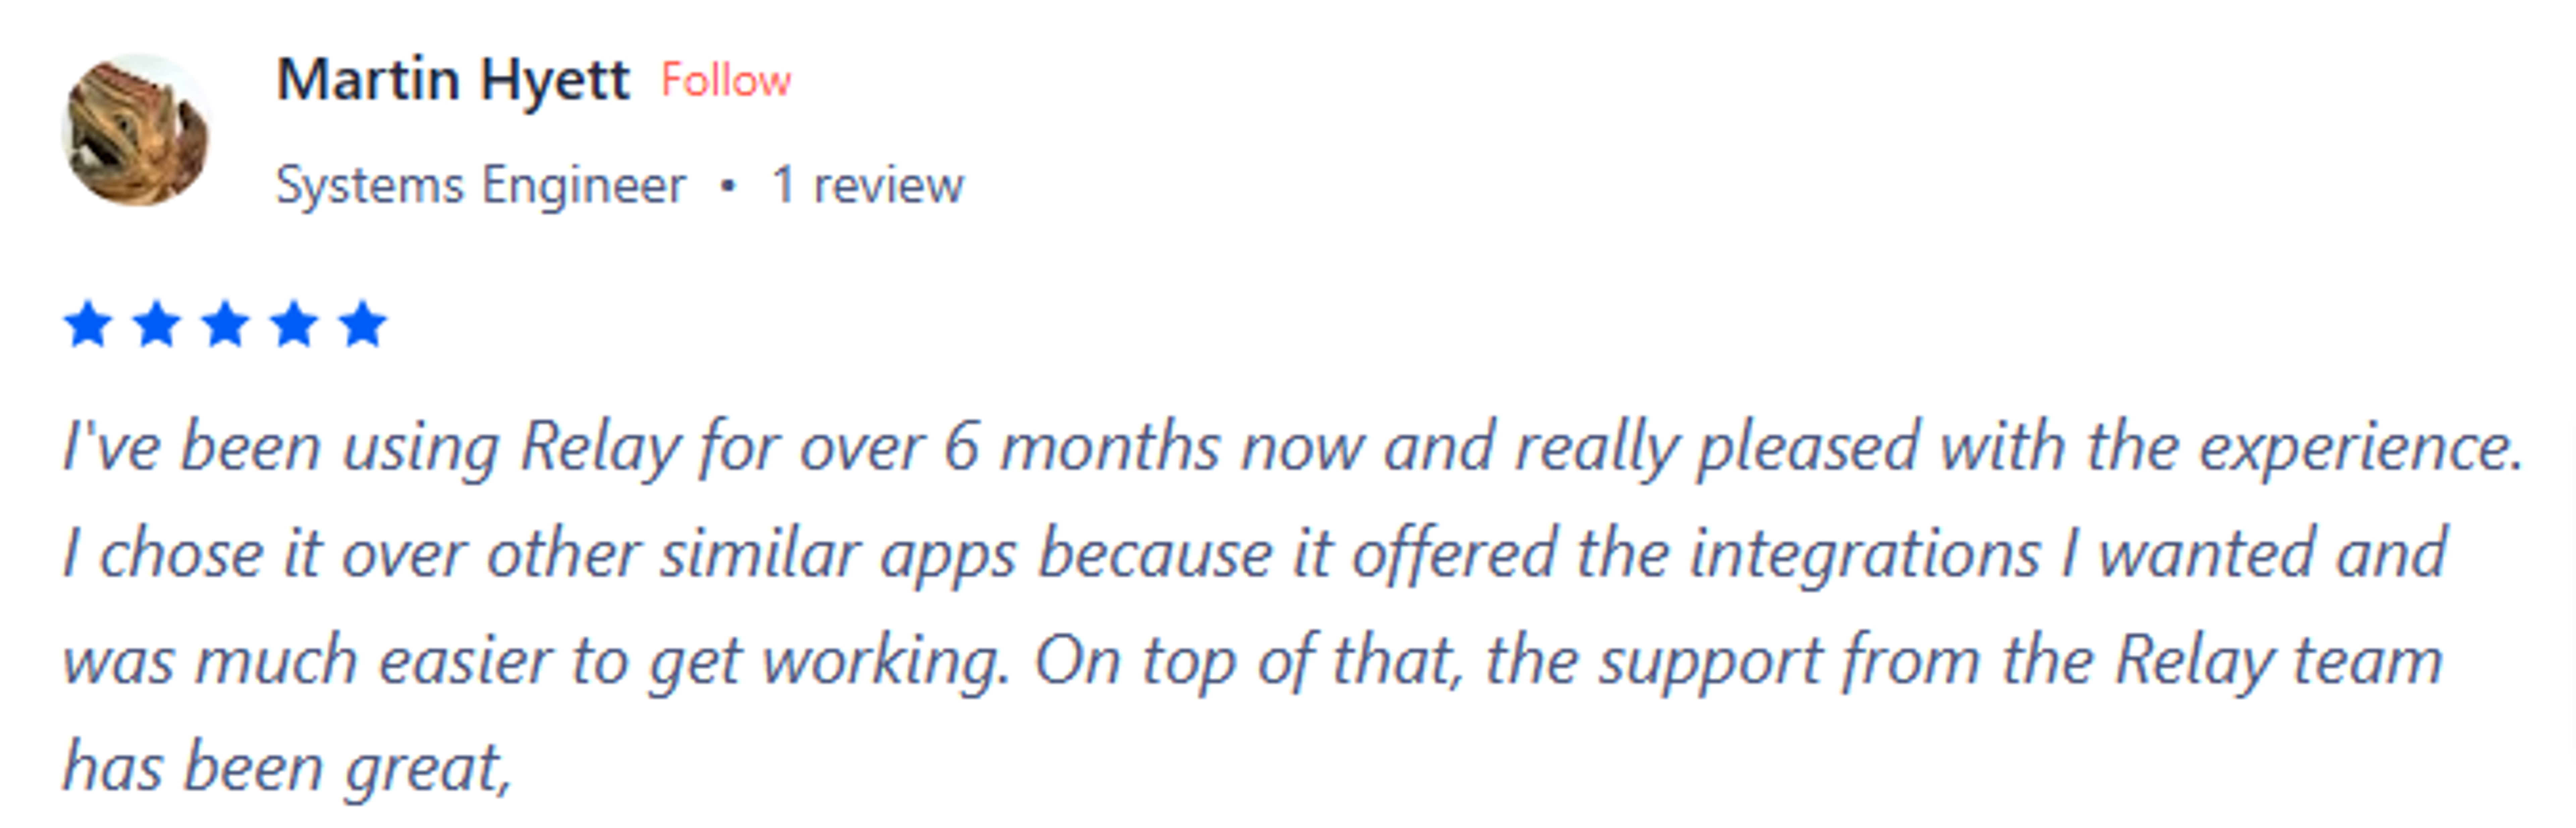 Relay.app review